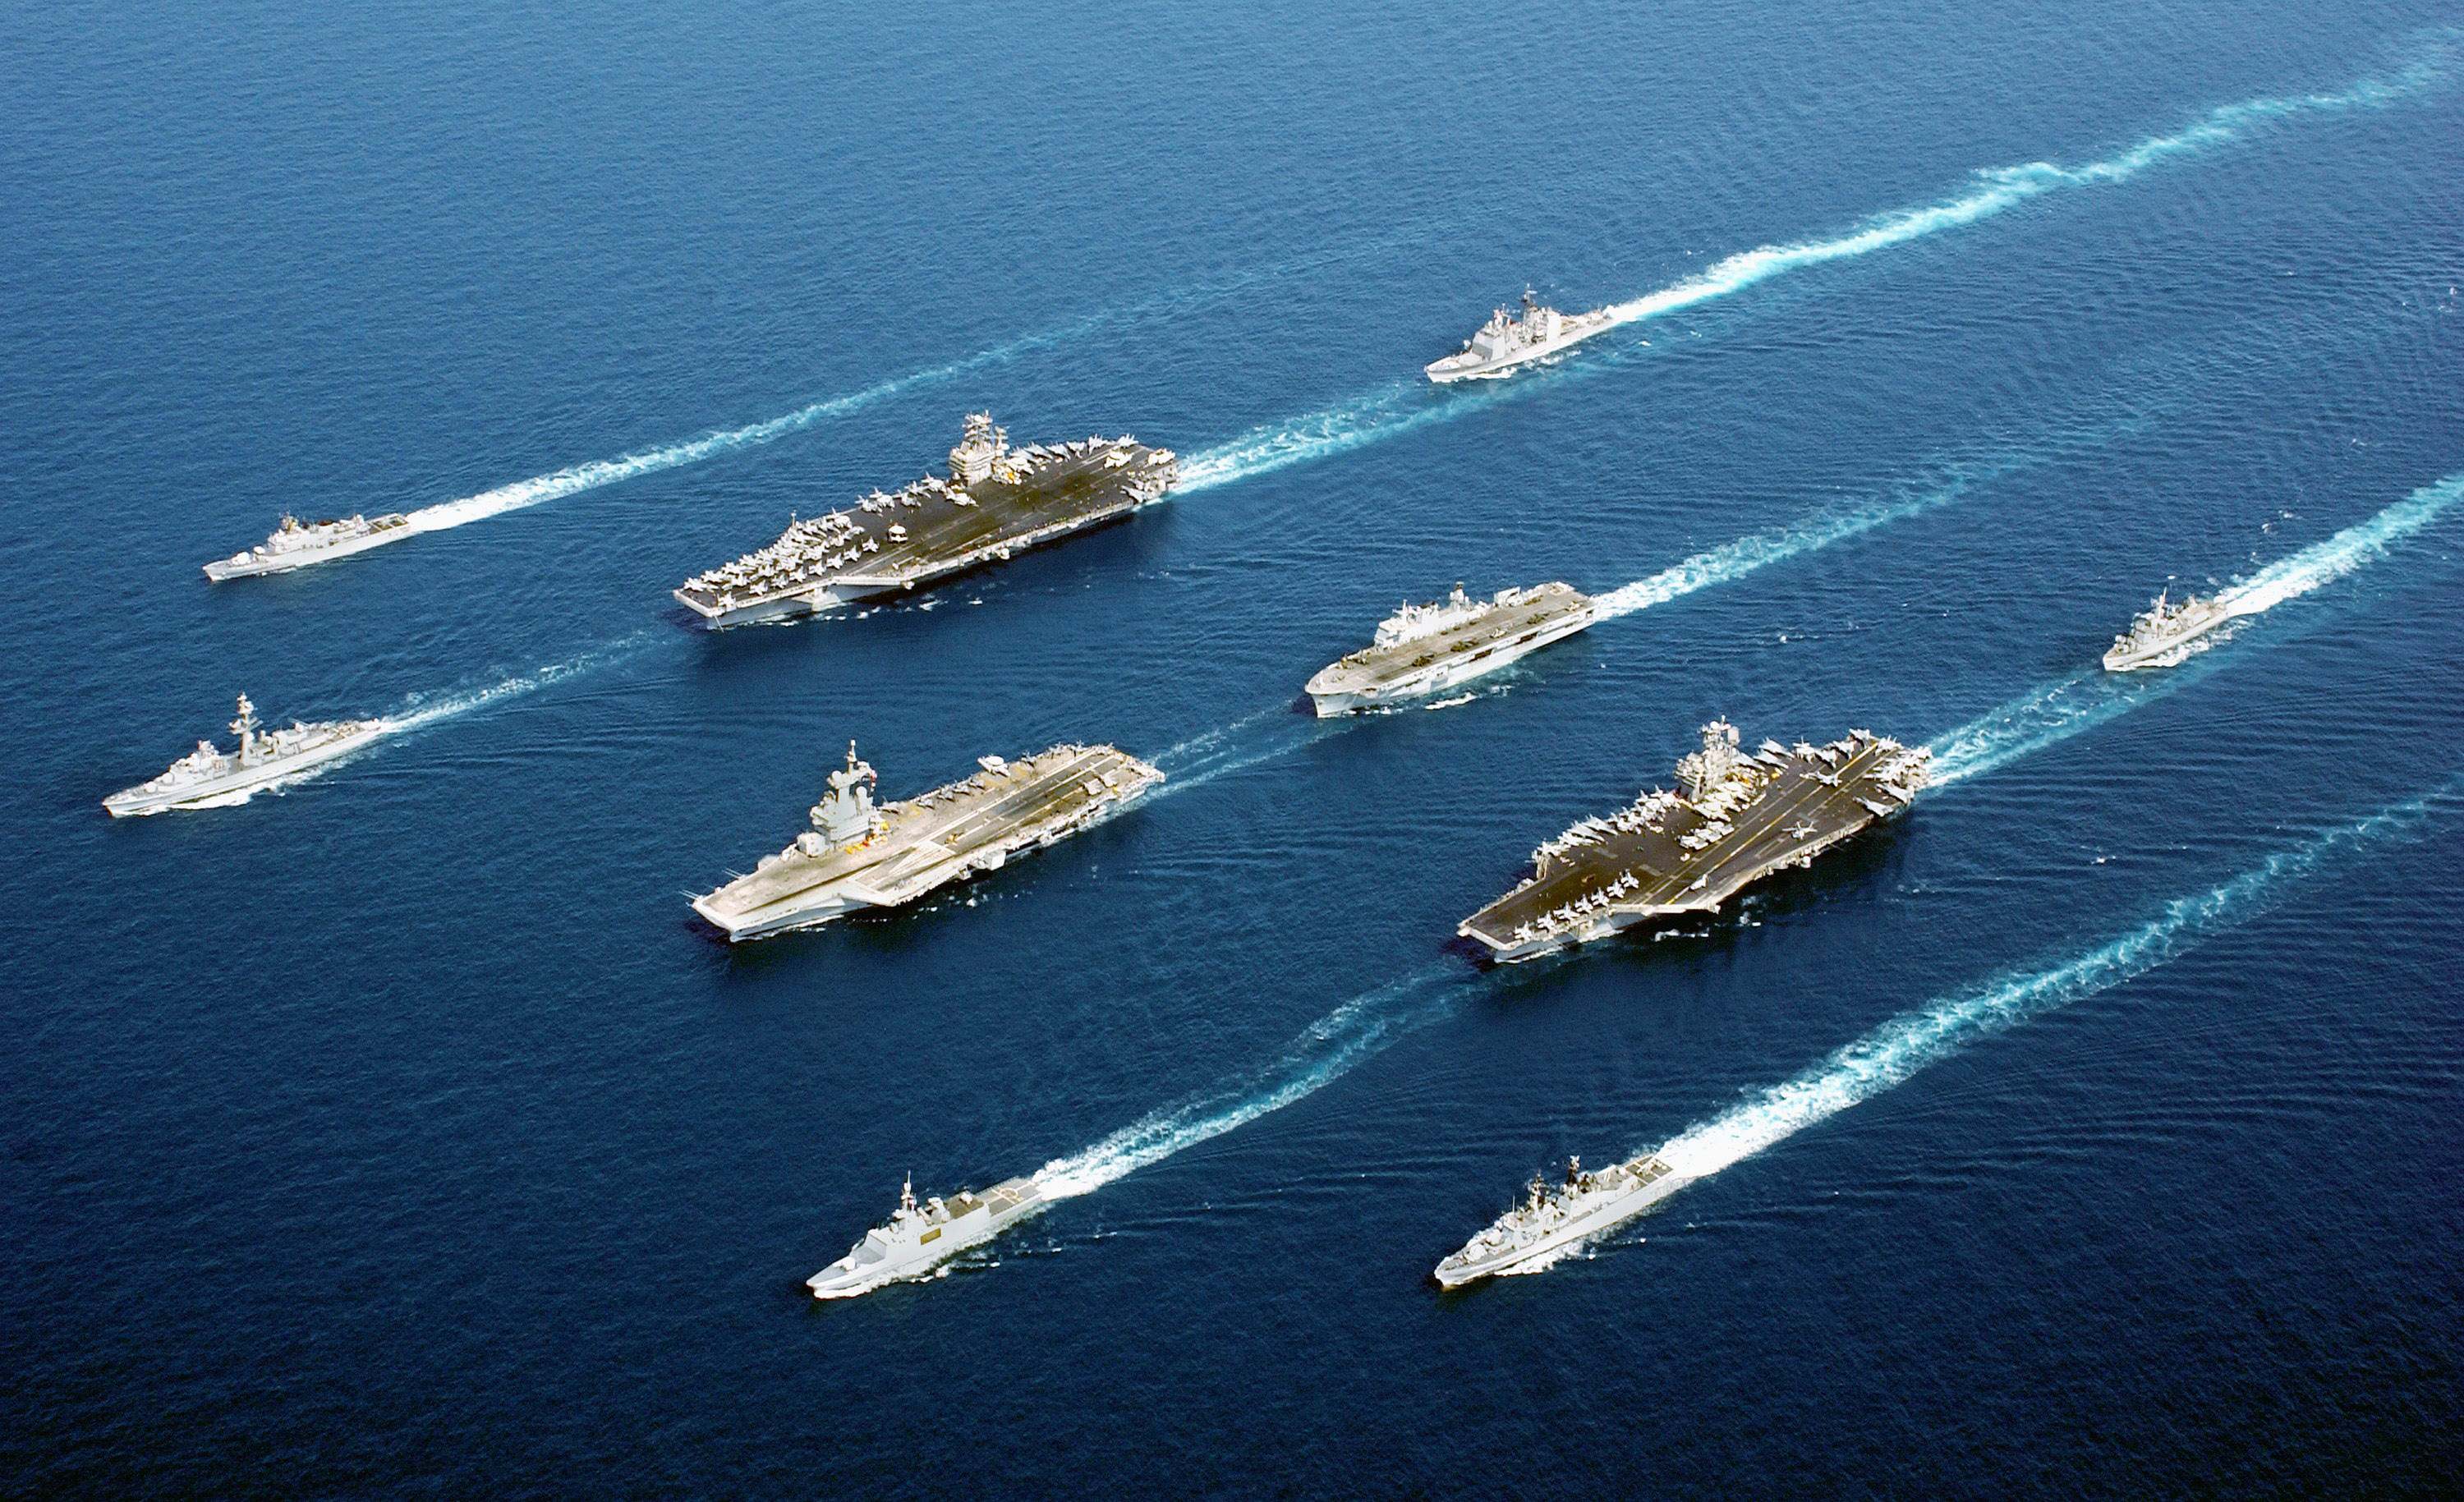 Fleet of Navy Ships image - Free stock photo - Public Domain photo